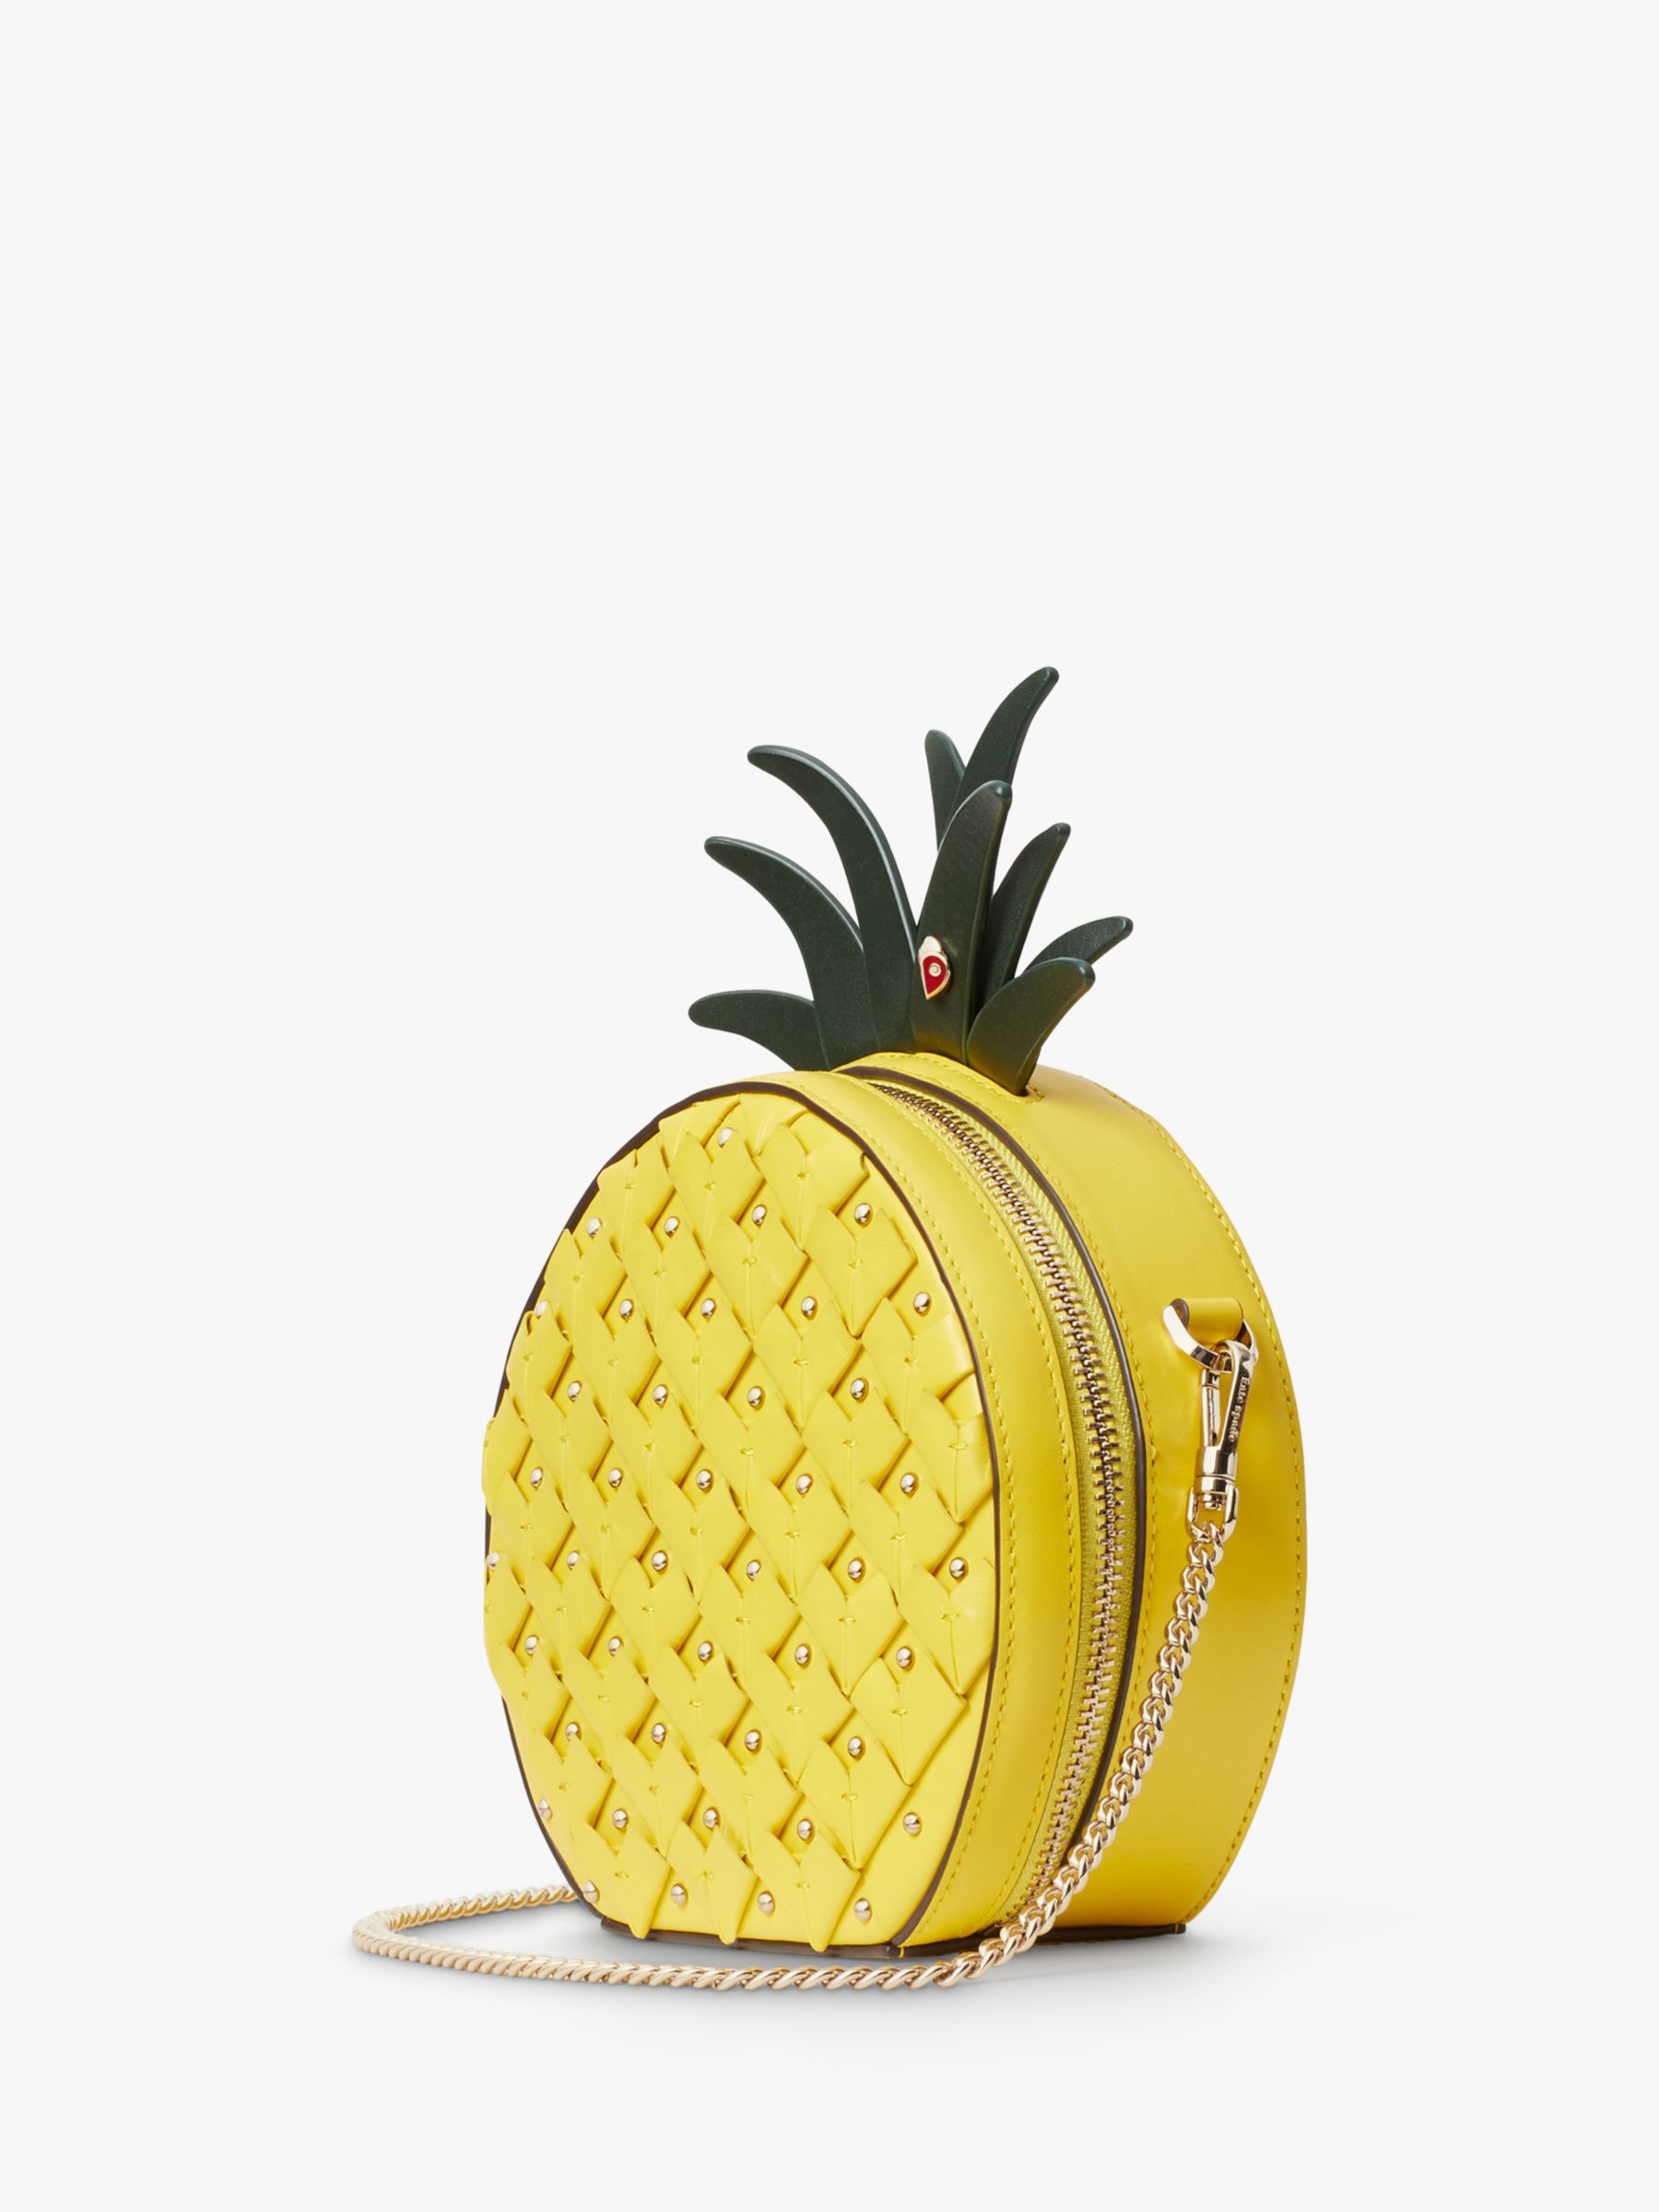 kate spade new york Picnic Pineapple Small Leather Cross Body Bag 